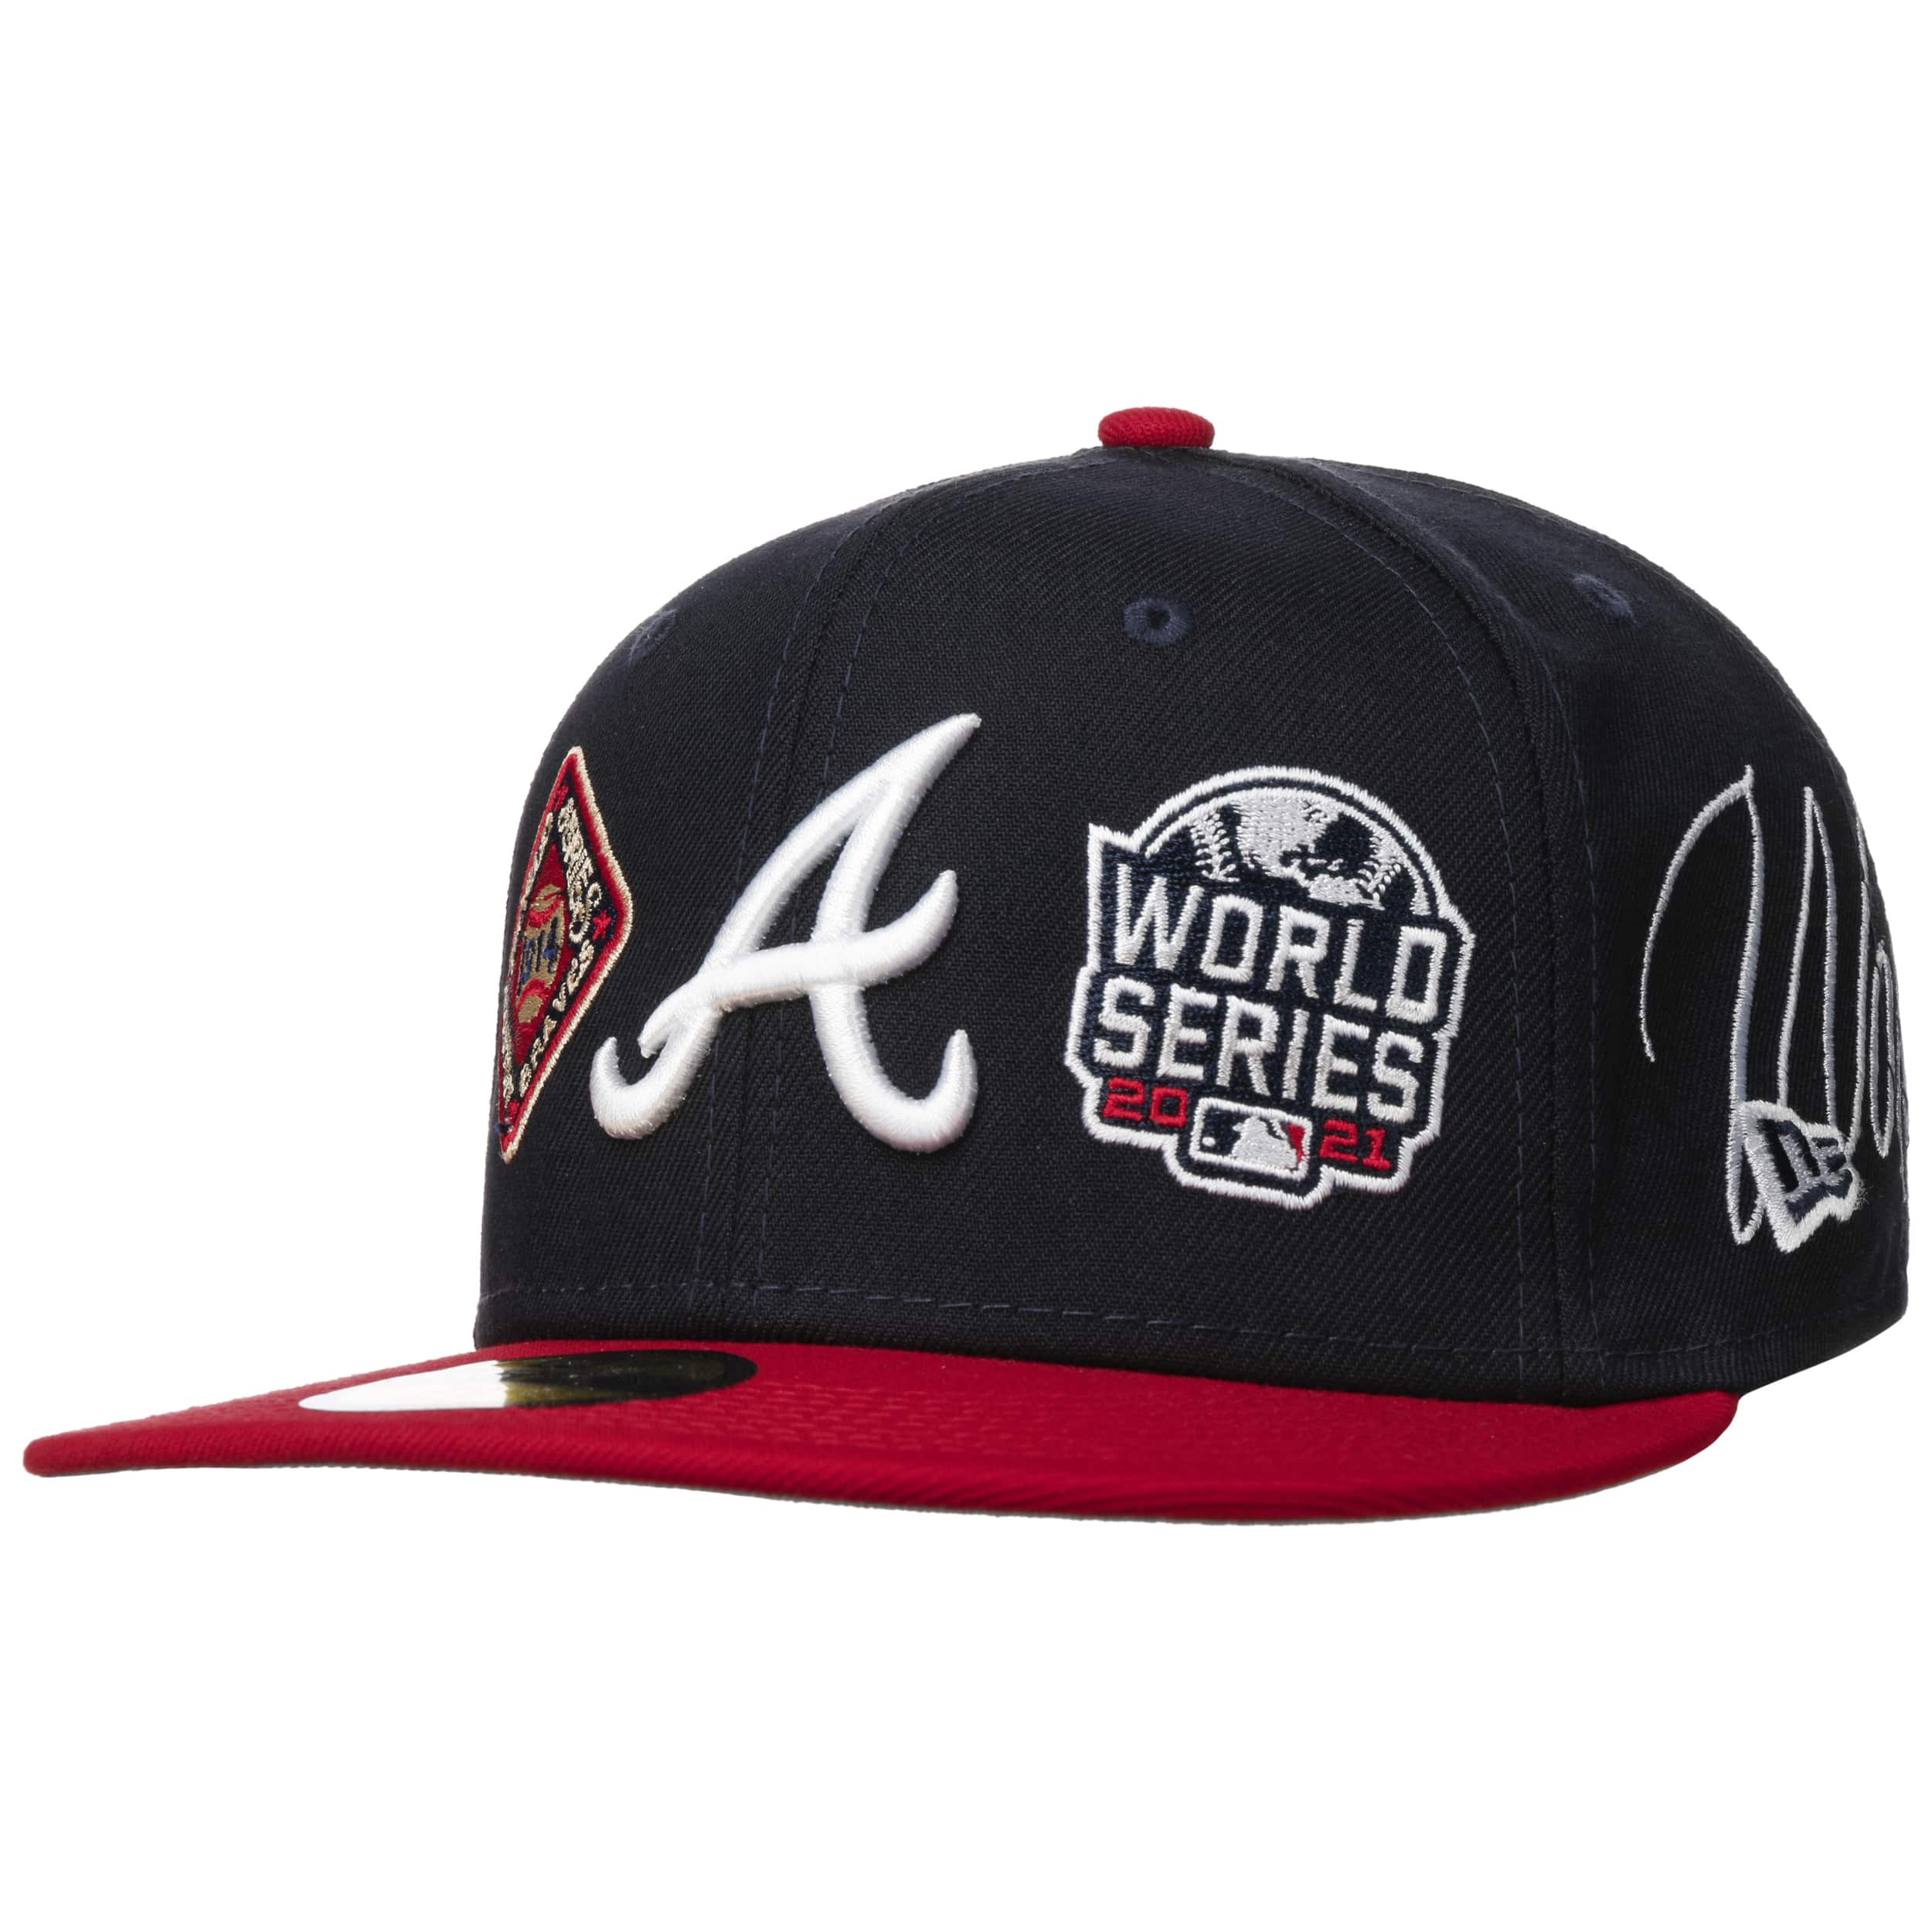 59Fifty MLB World Series Braves Cap by New Era - 57,95 €